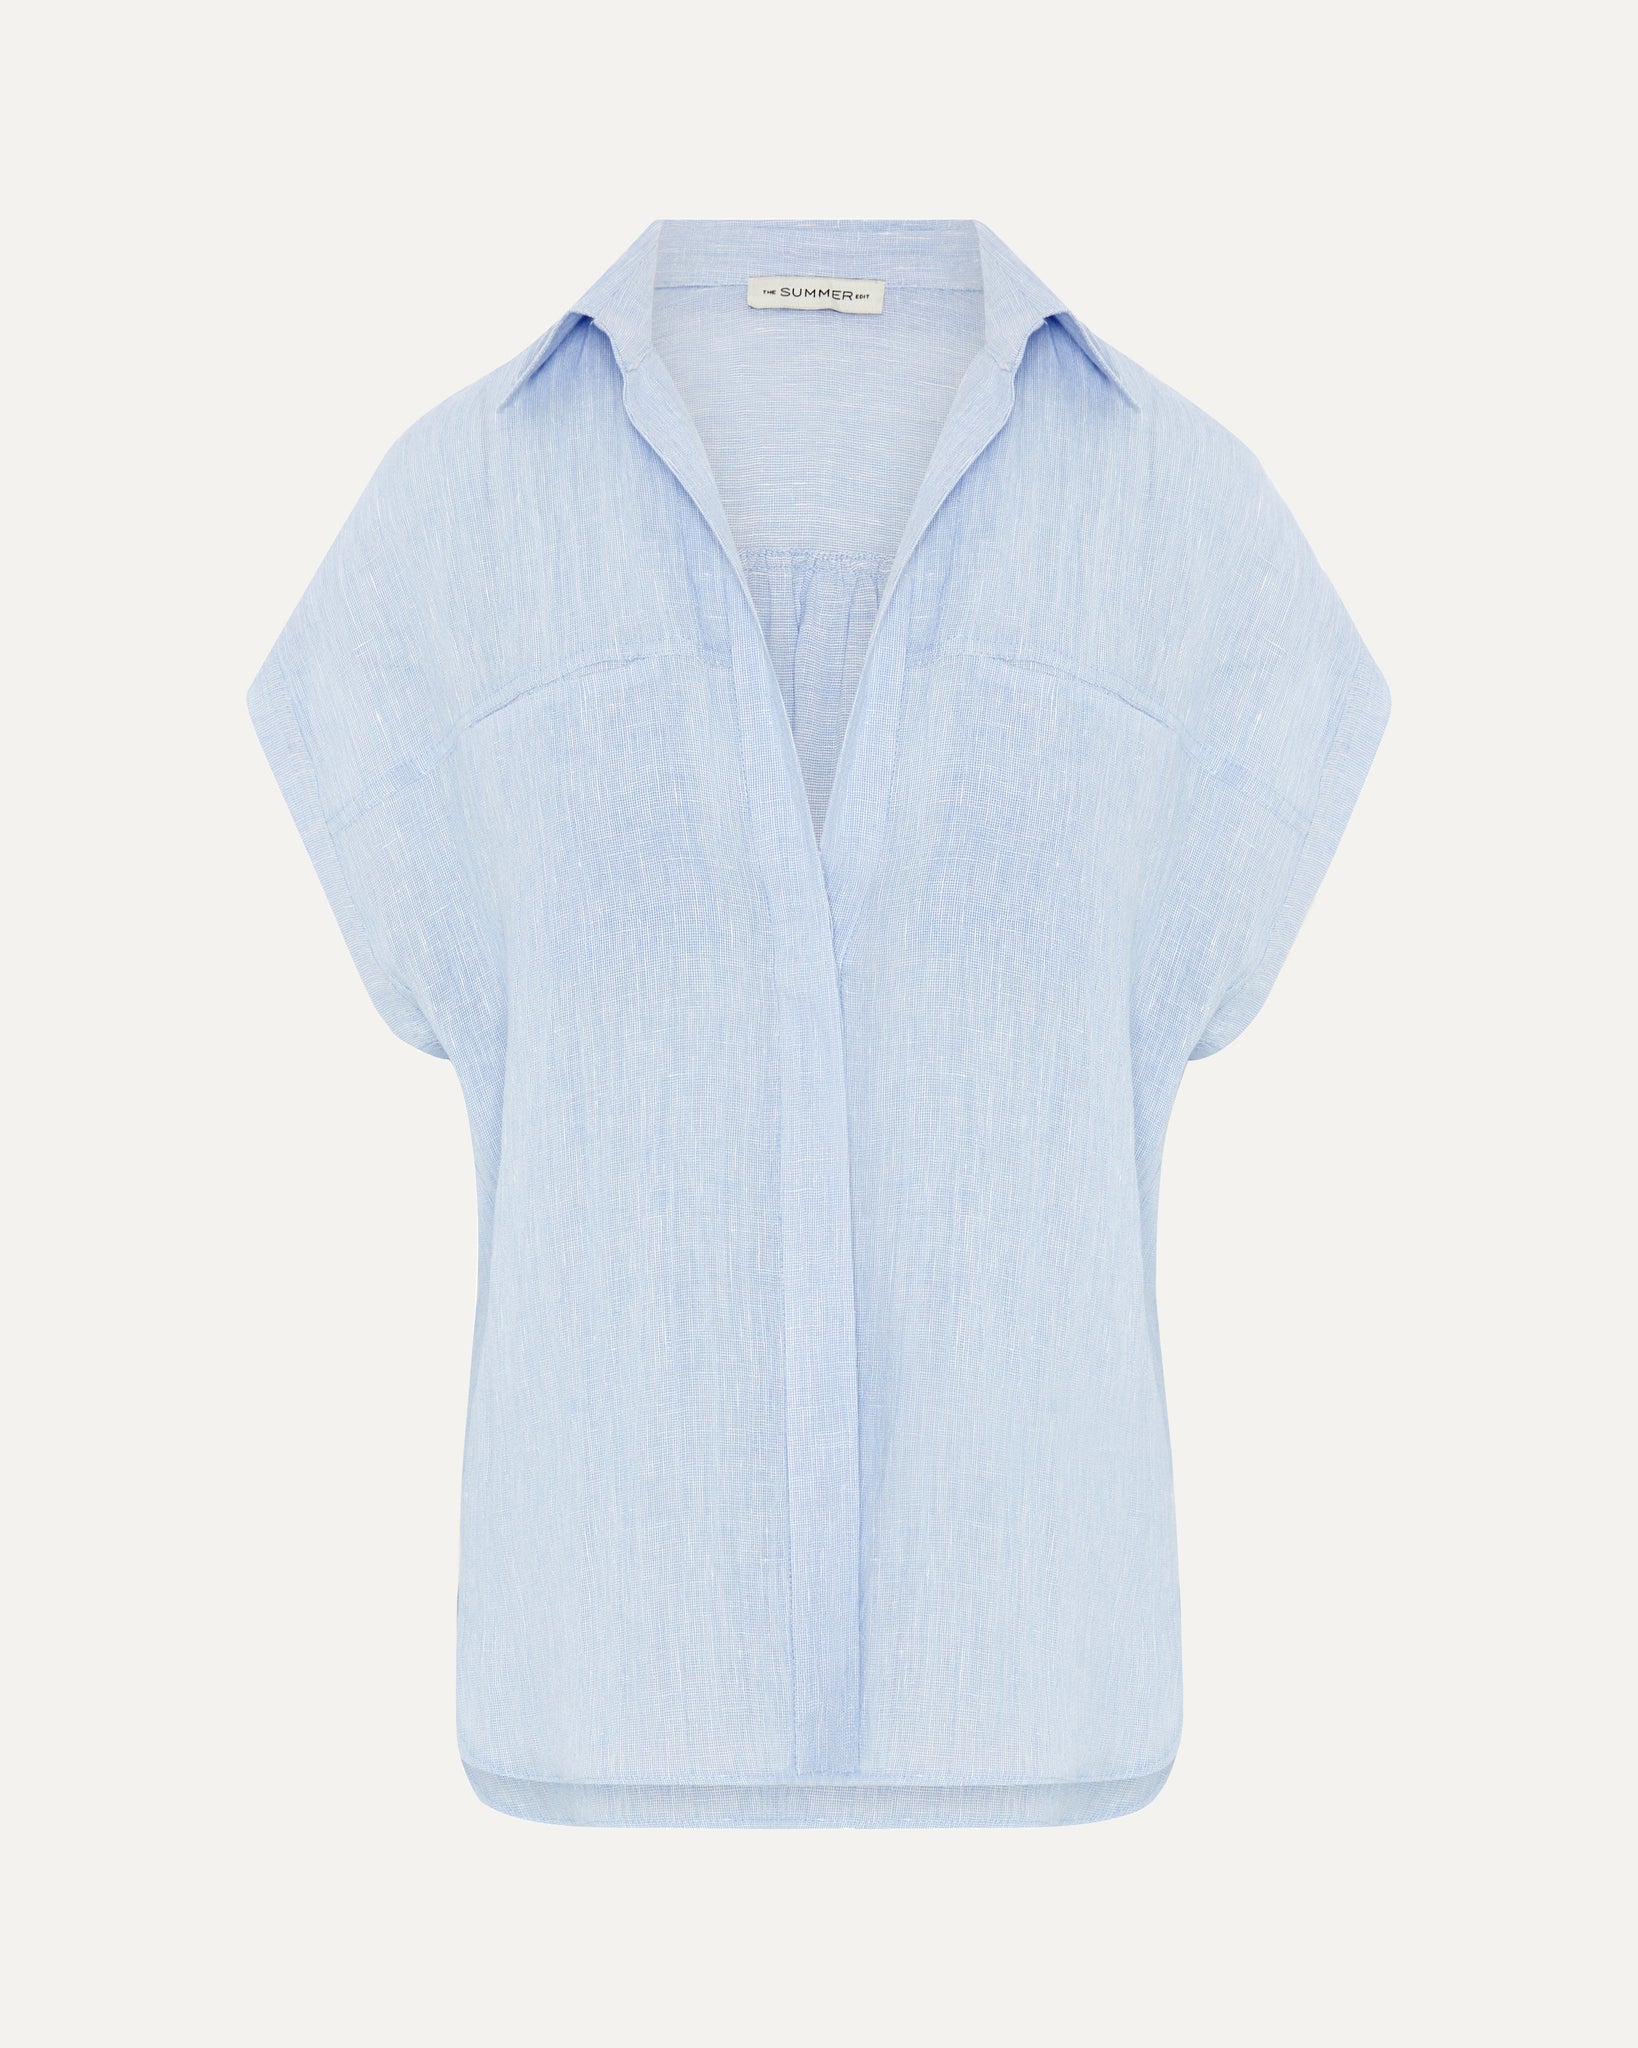 MALI - Ice Blue Linen Shirt